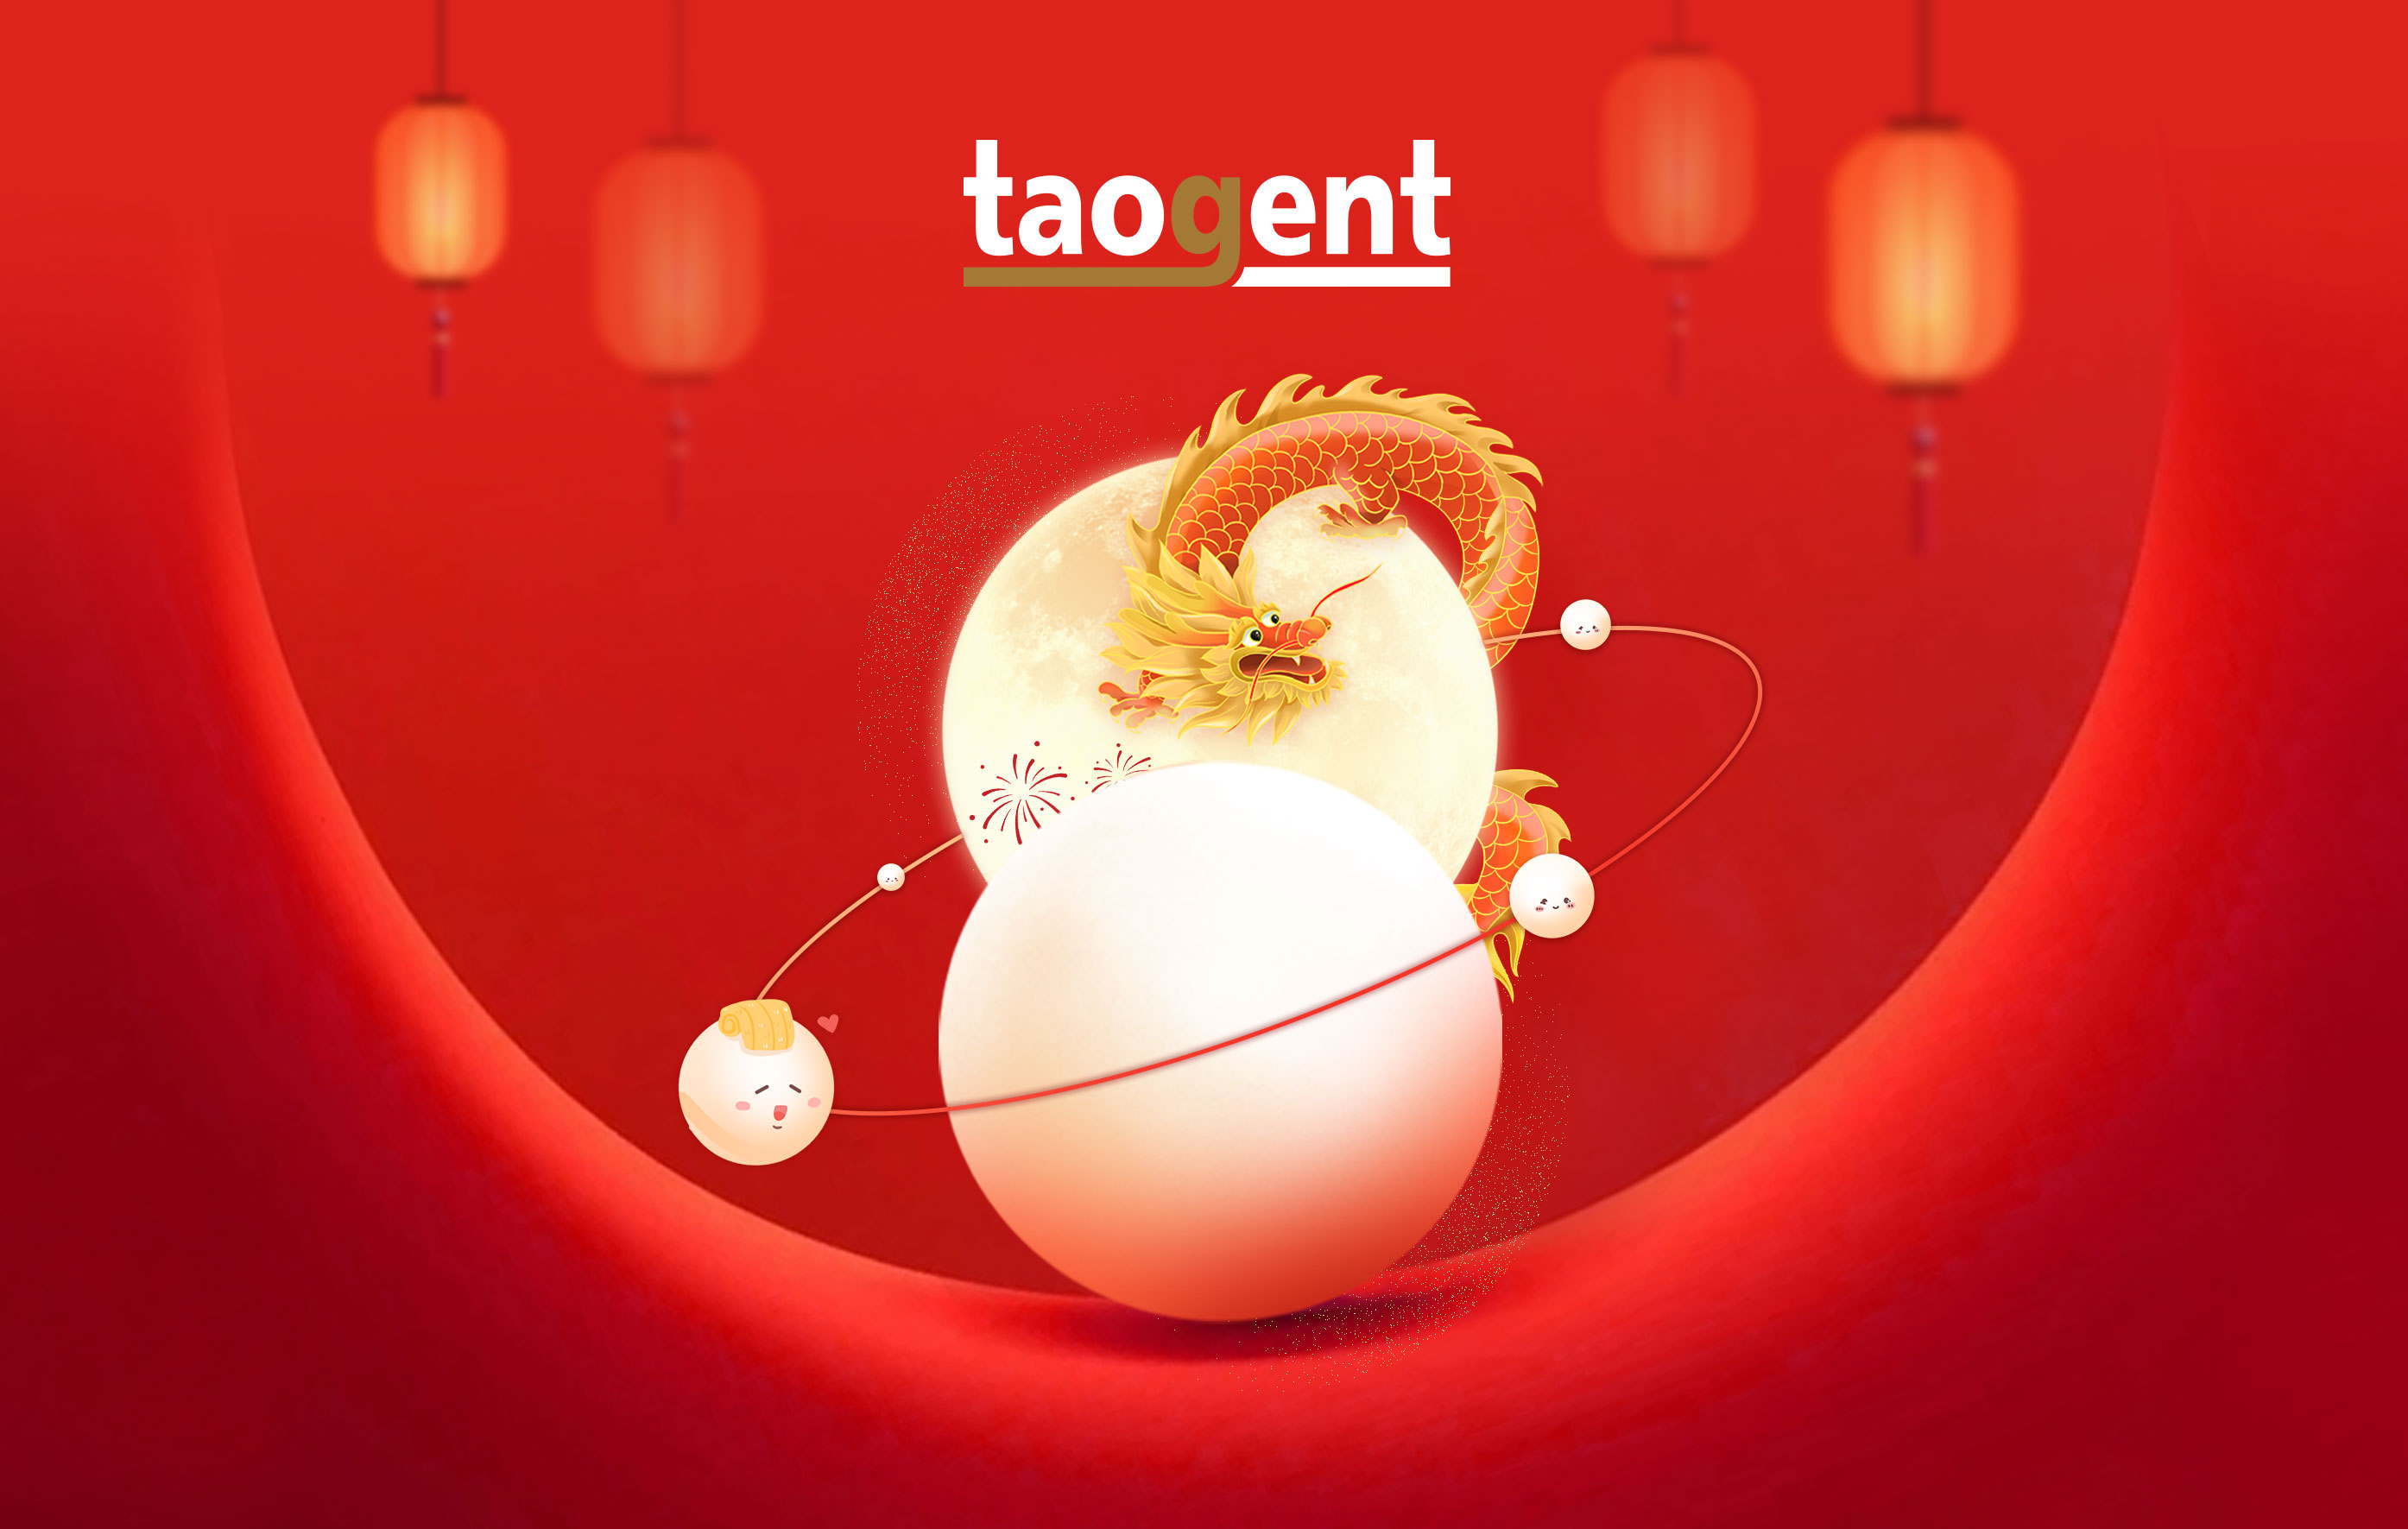 Taogent Bright | Wishing Everyone a Joyful and Harmonious Lantern Festival with Family Happiness